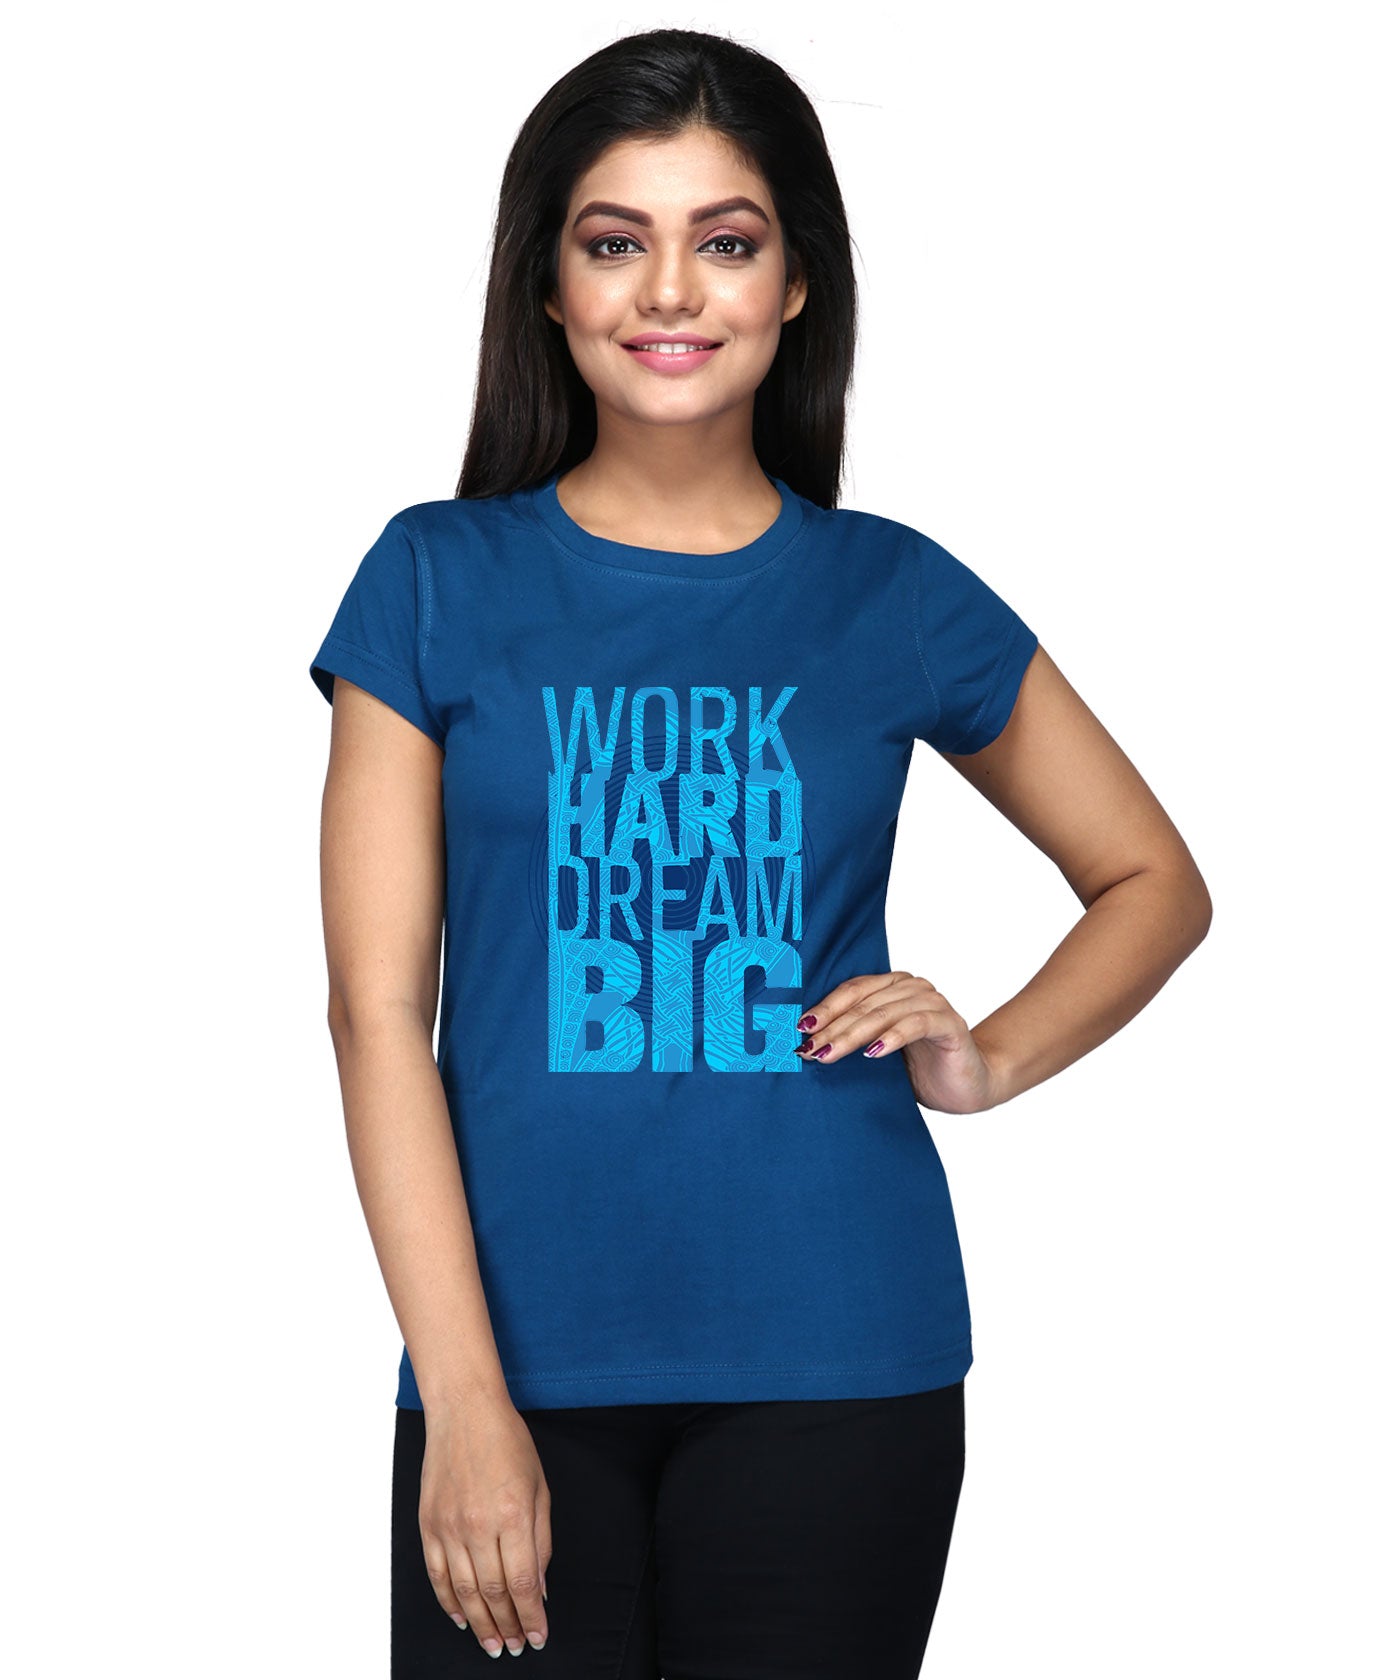 Work Hard Dream Big - Block Print Tees for Women - Intense Blue